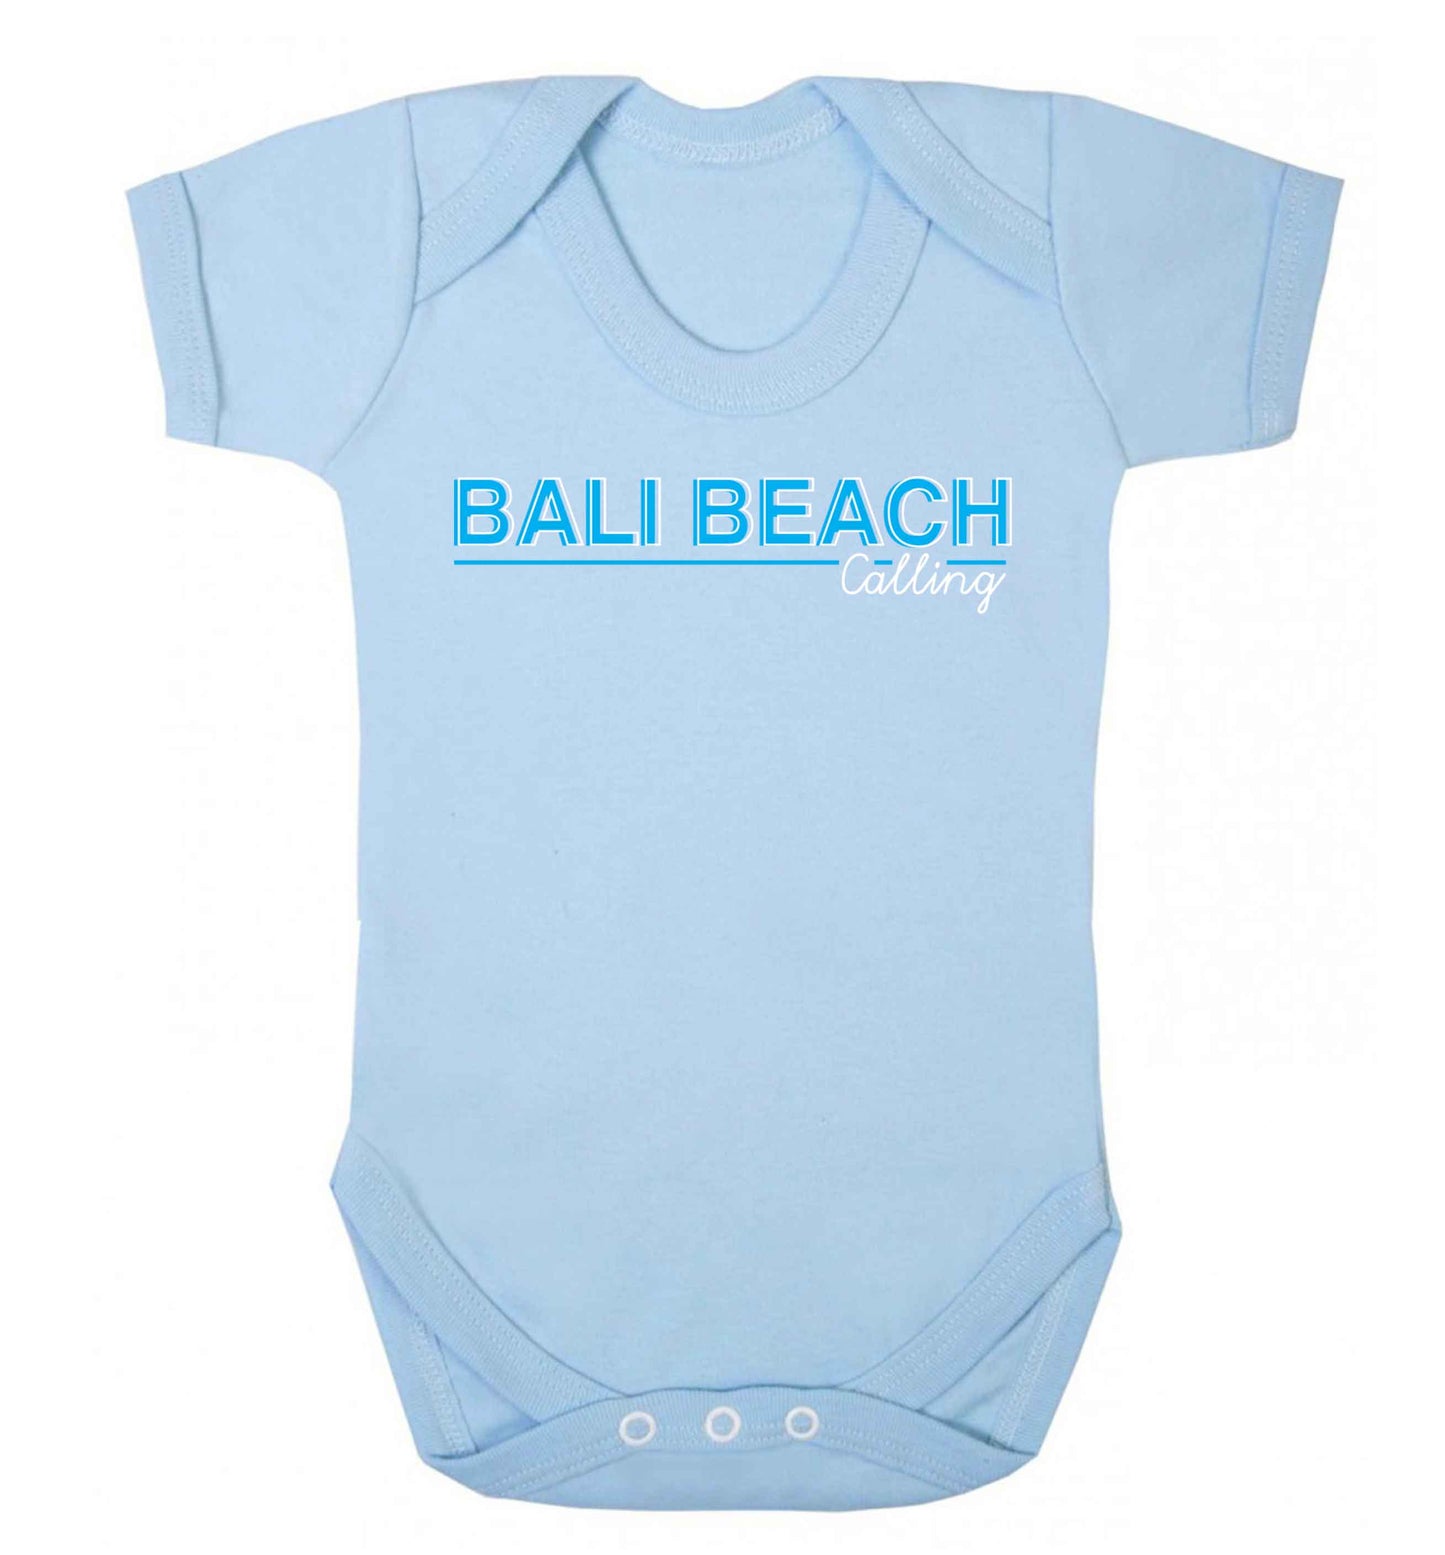 Bali beach calling Baby Vest pale blue 18-24 months